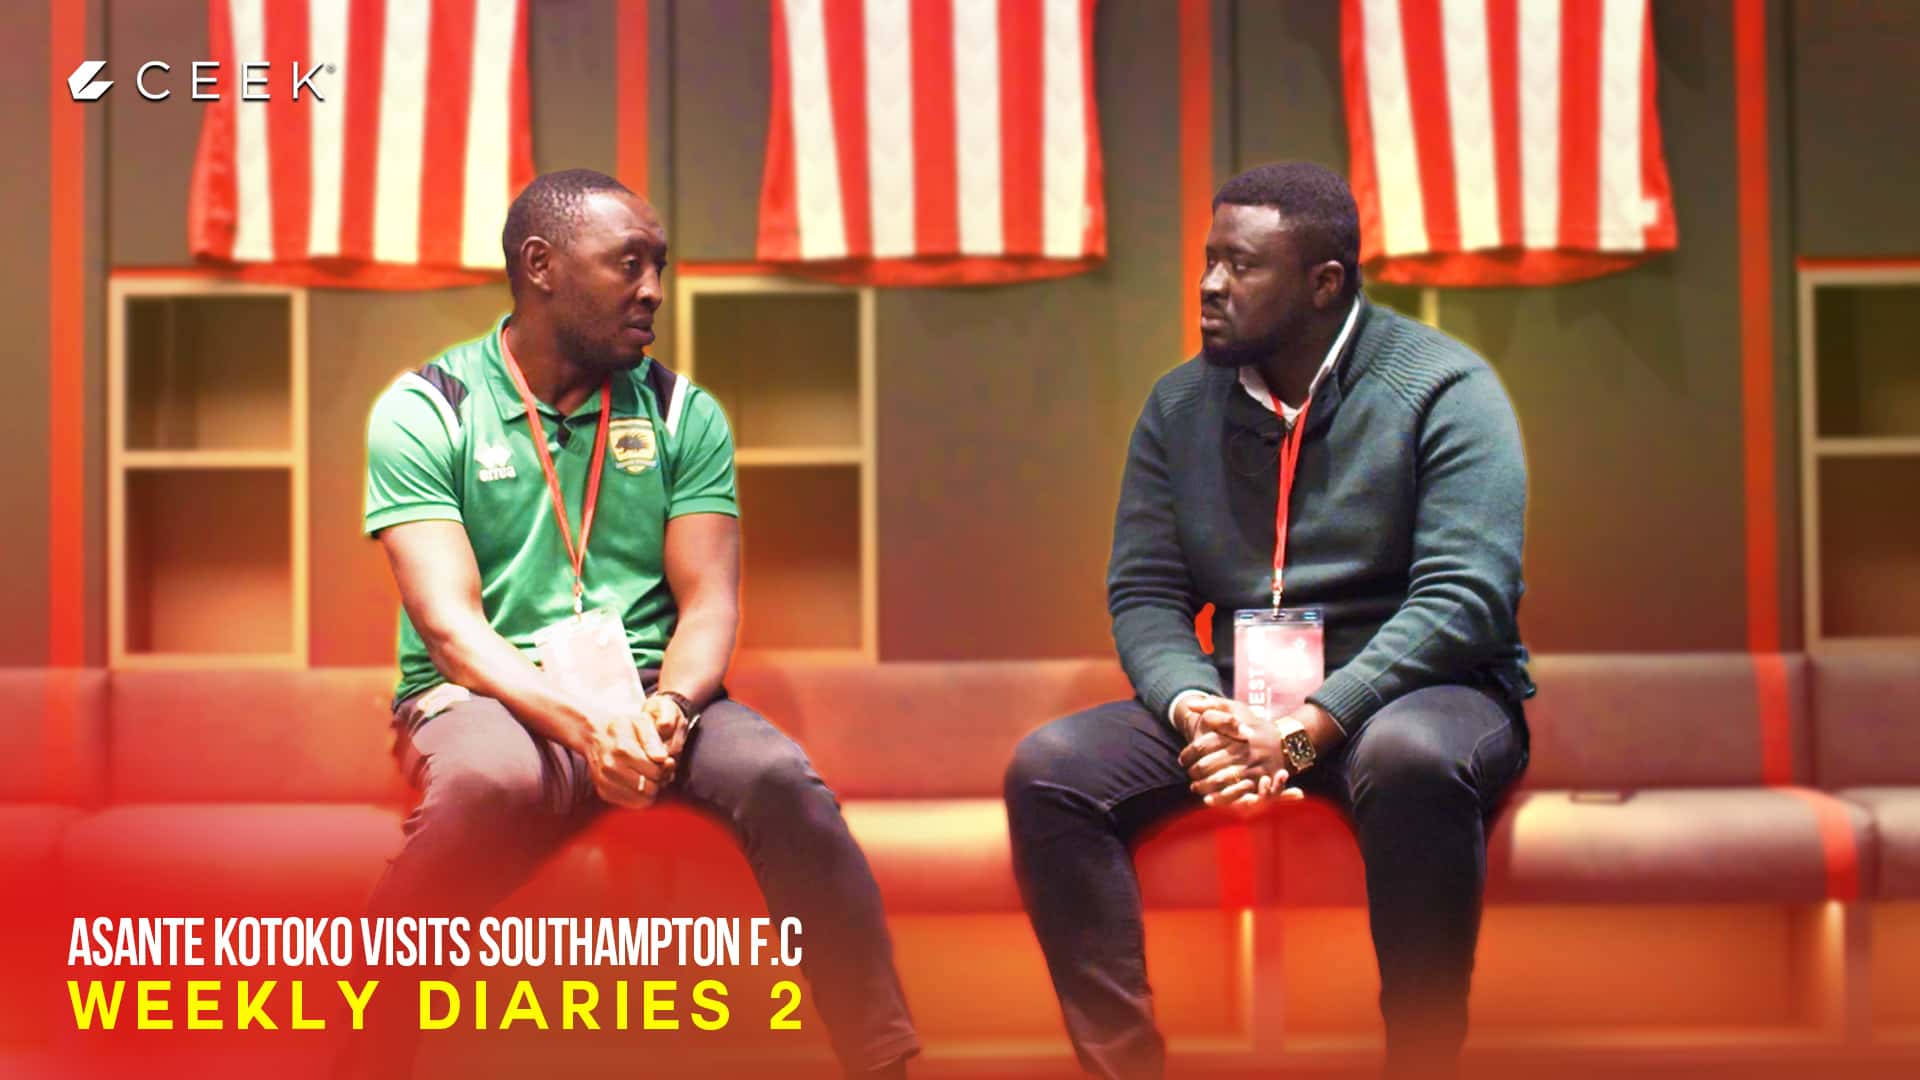 Asante Kotoko visits Southampton F.C: Weekly Diaries 2